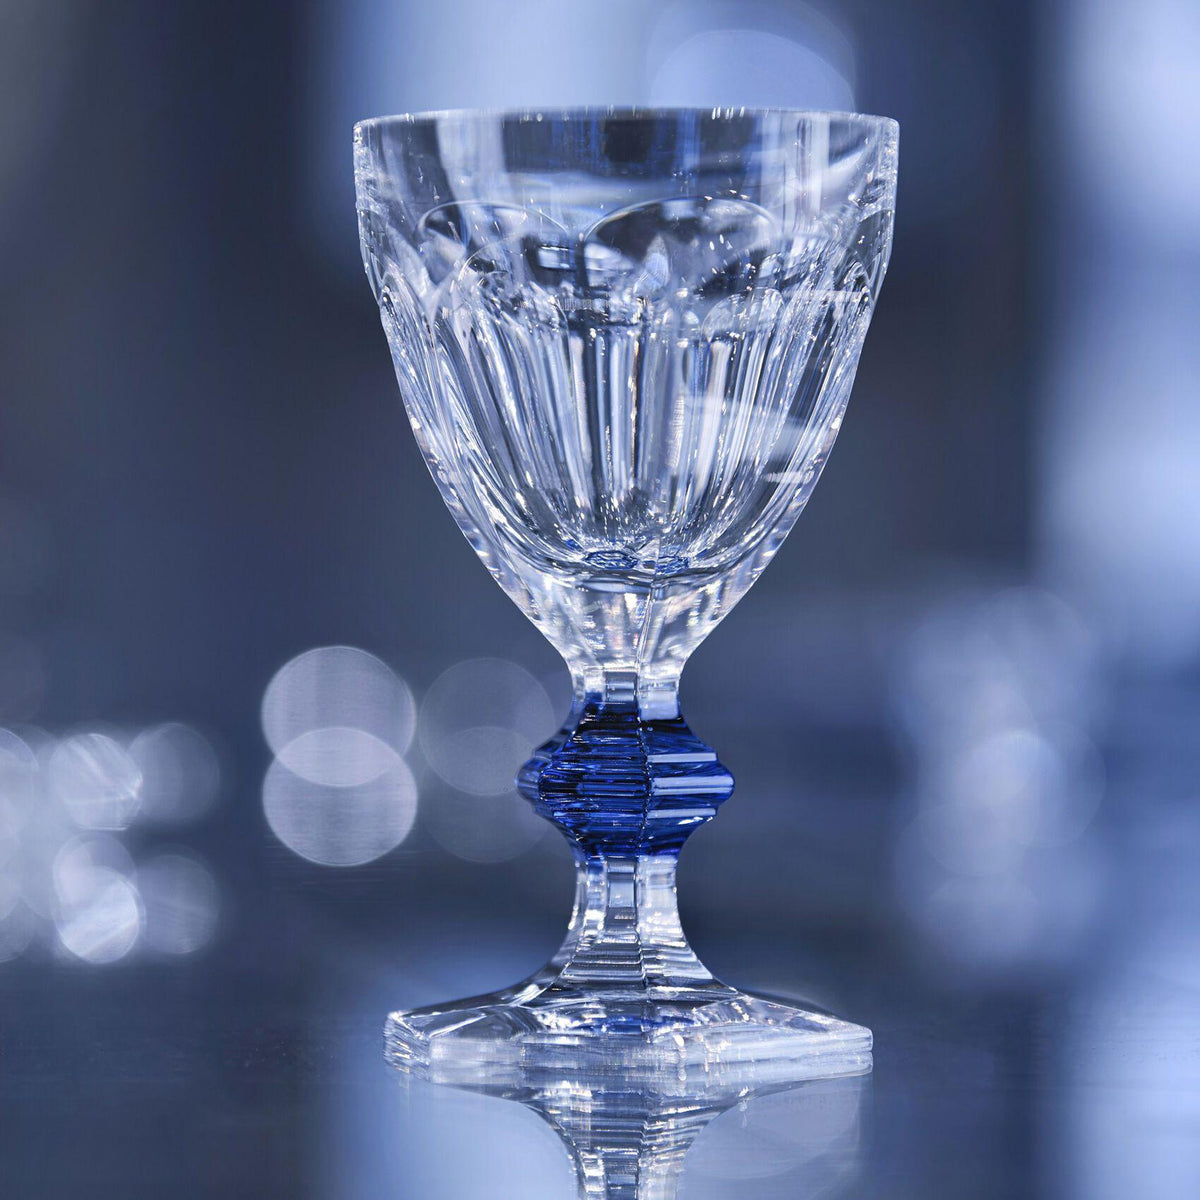 Harcourt 1841 Glass Set of 2